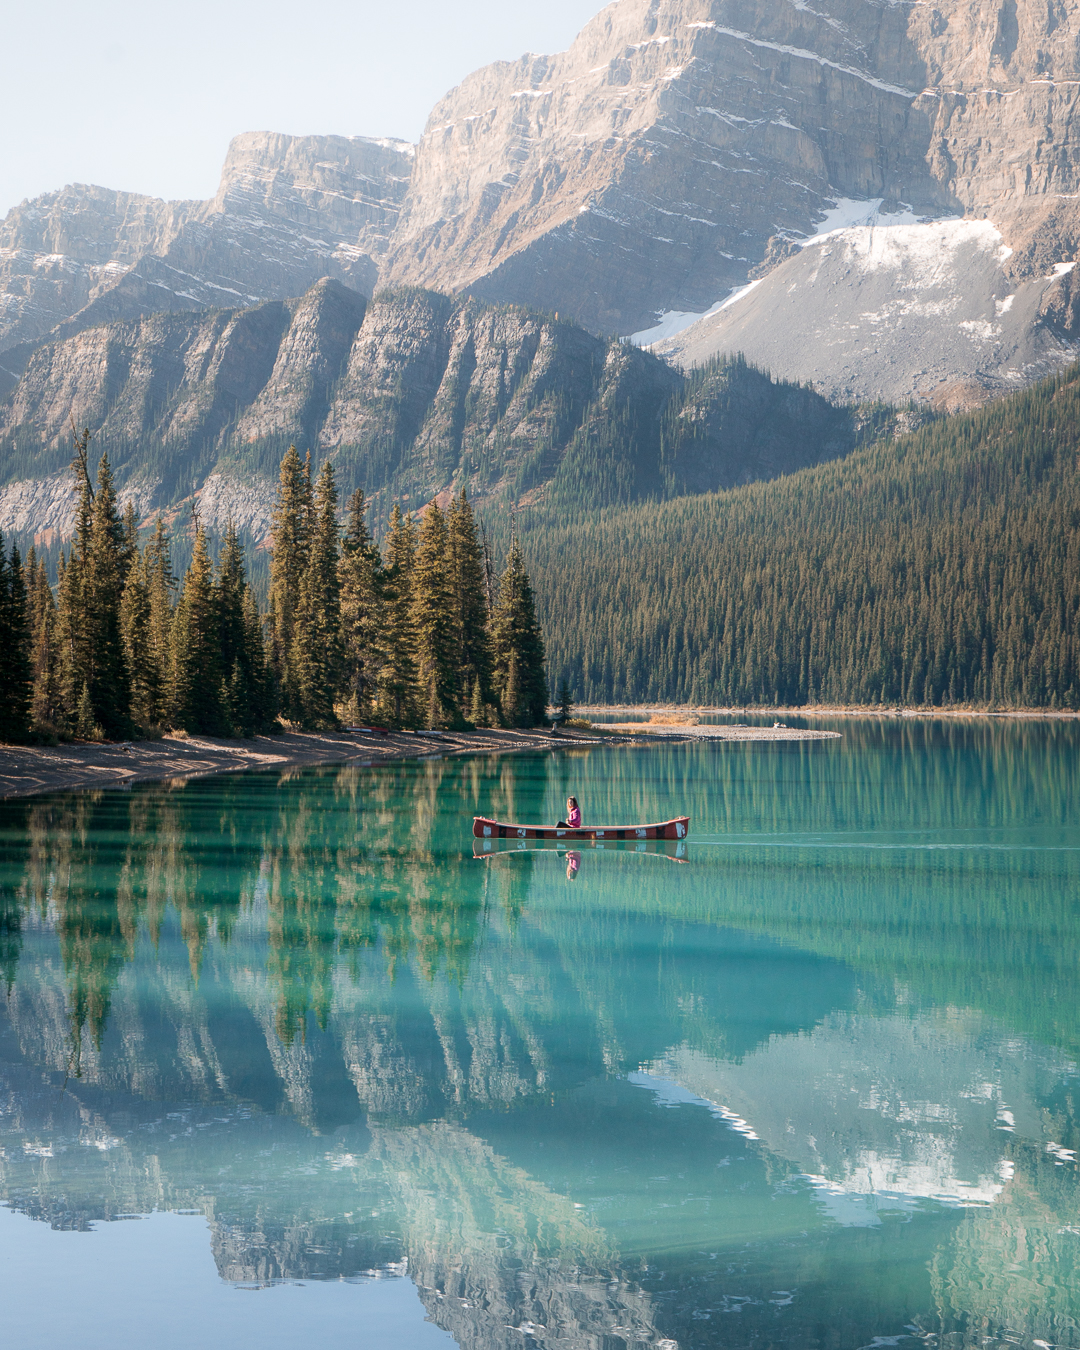 Canoeing on one of Banff’s beautiful alpine lakes.